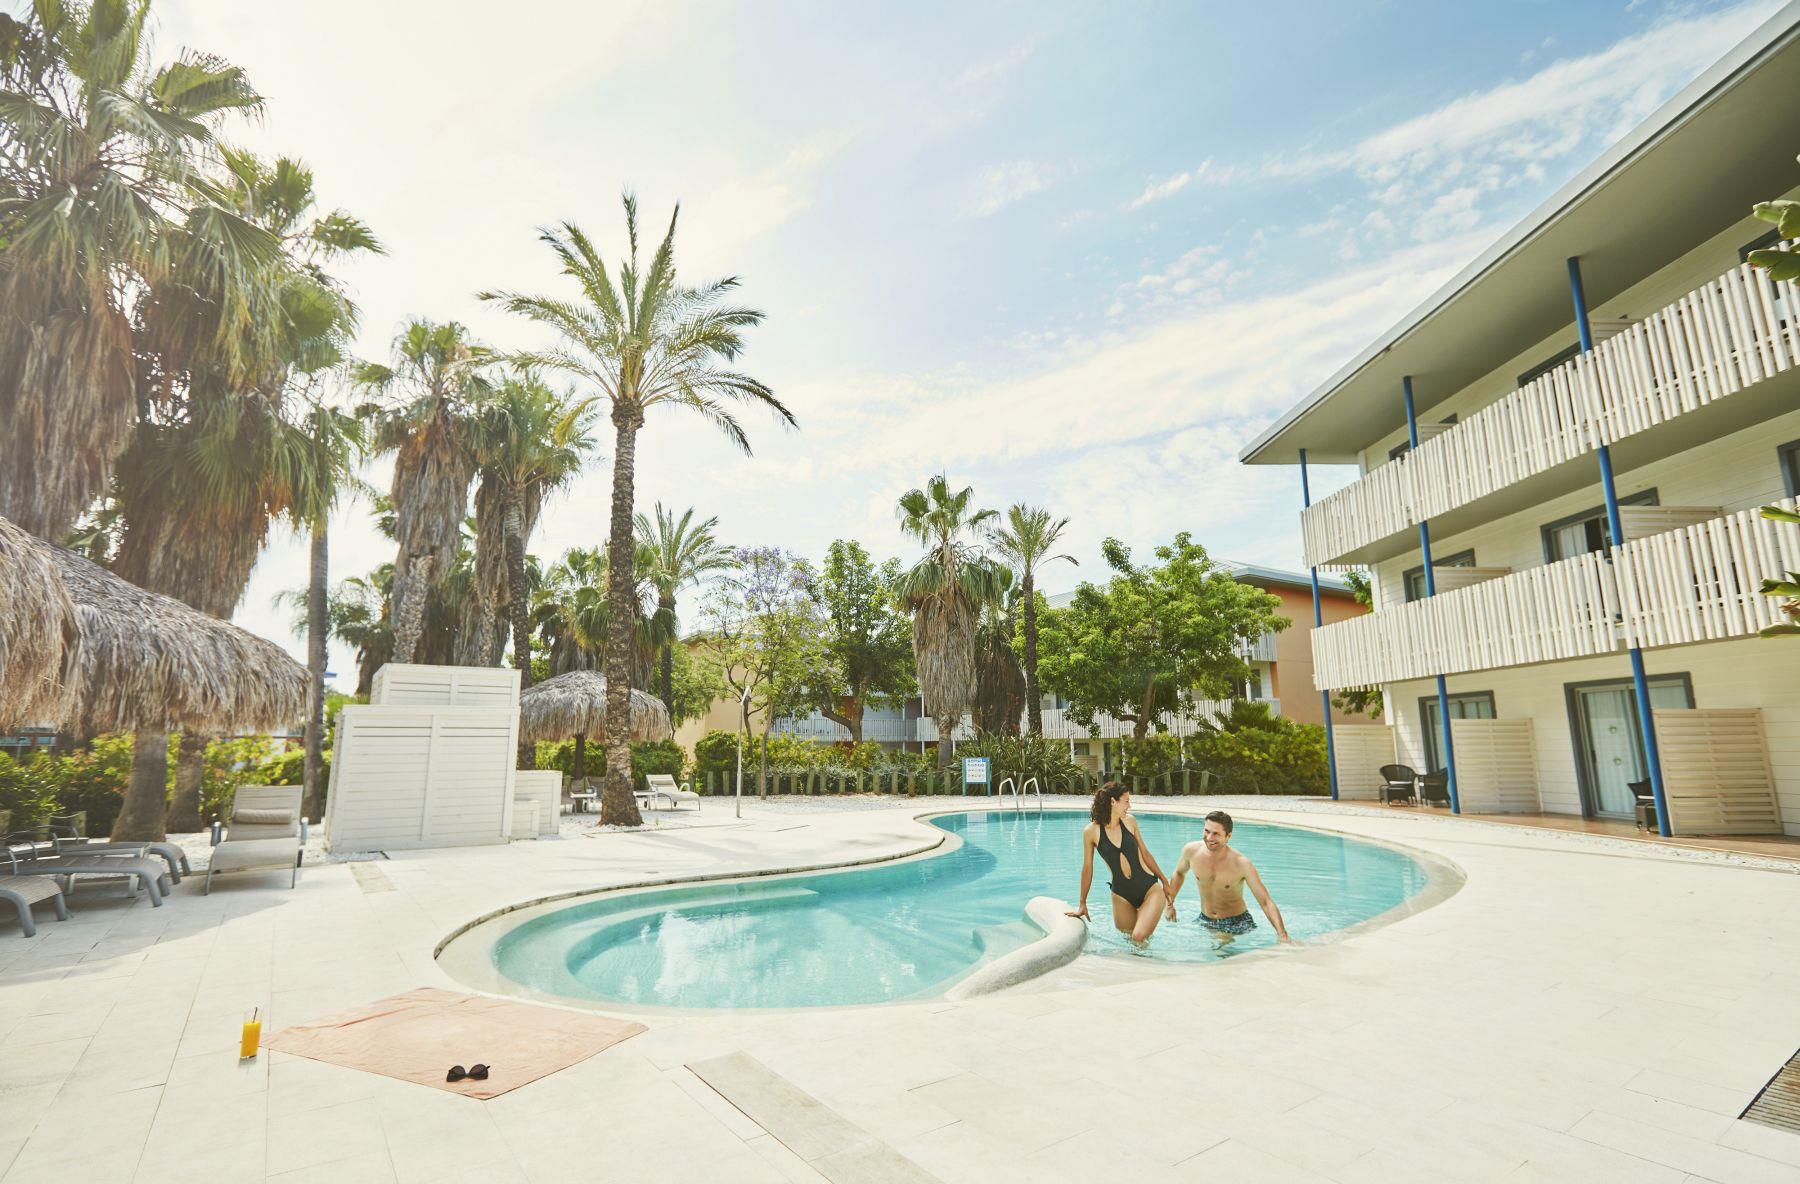 PortAventura Hotel Caribe